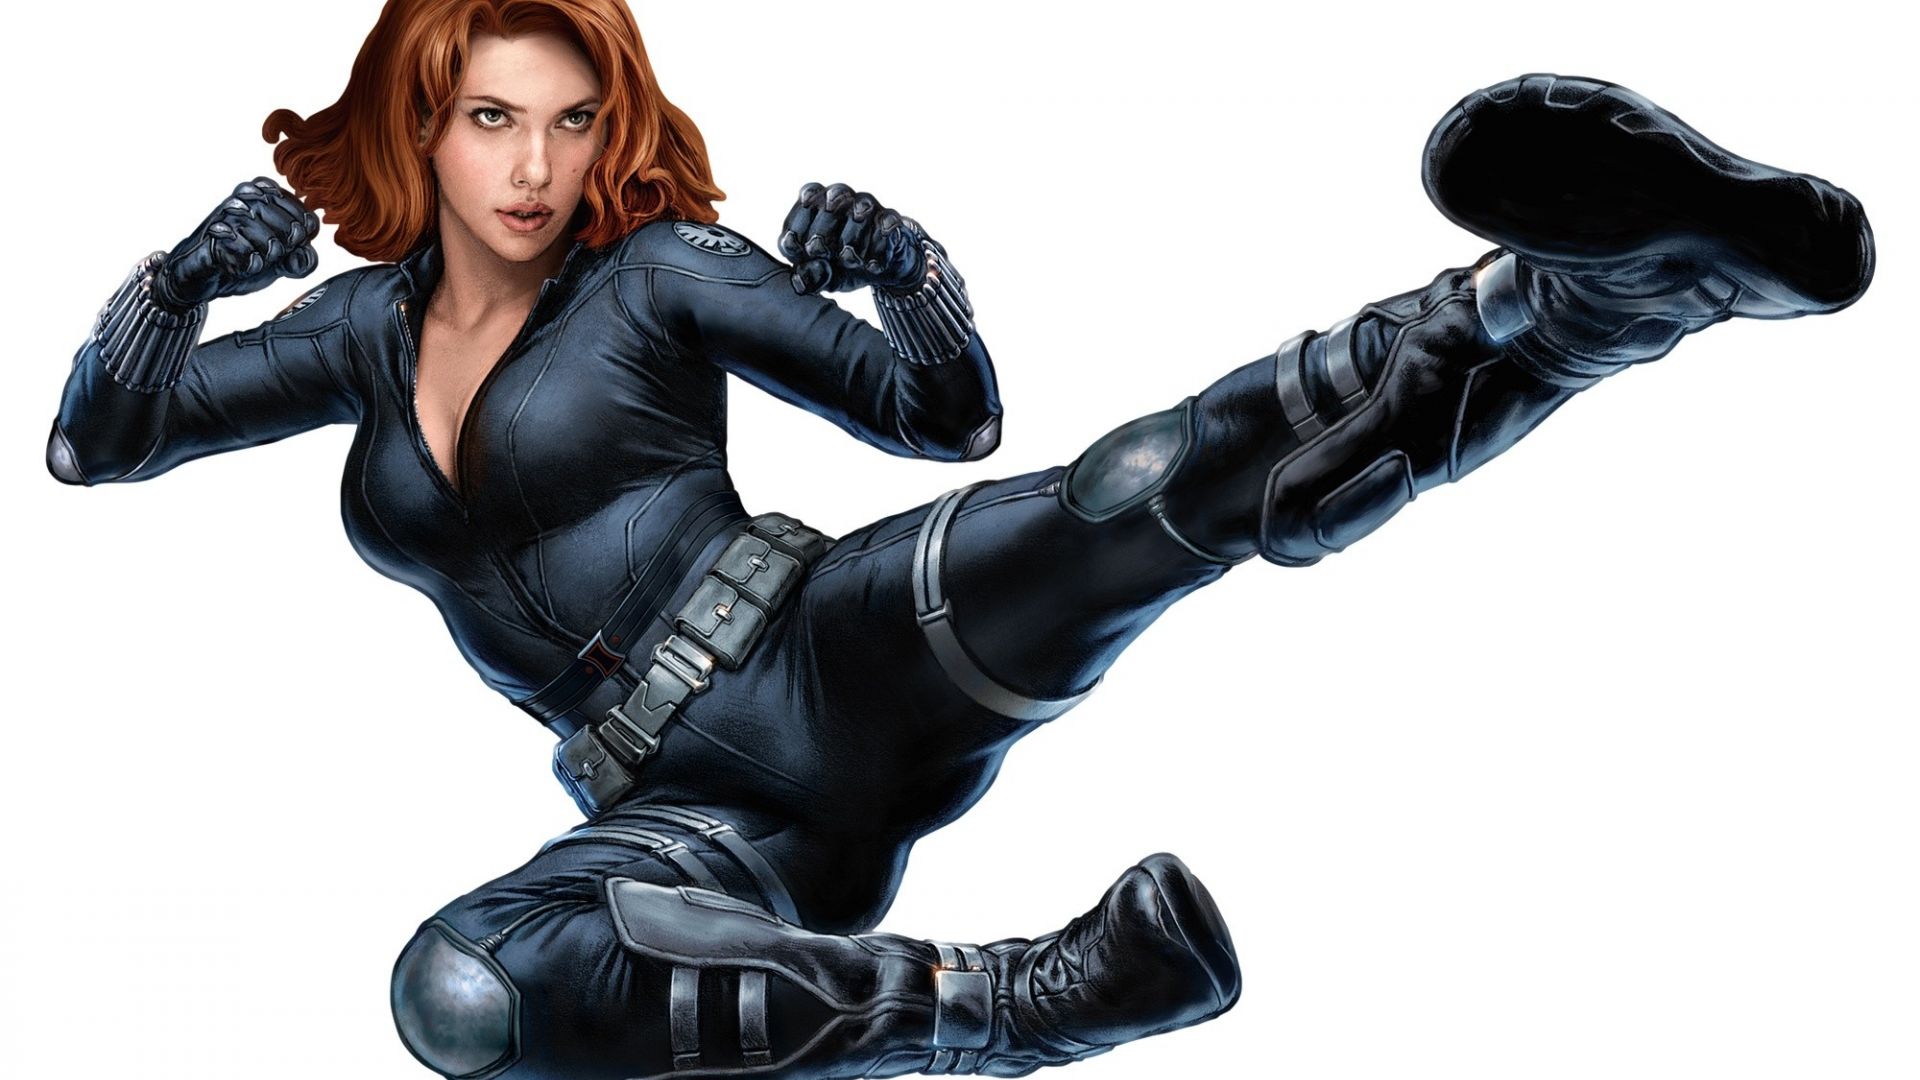 Desktop Wallpaper Scarlett Johansson As Black Widow, Marvel Comics, Hd Image,  Picture, Background, Apzwkj